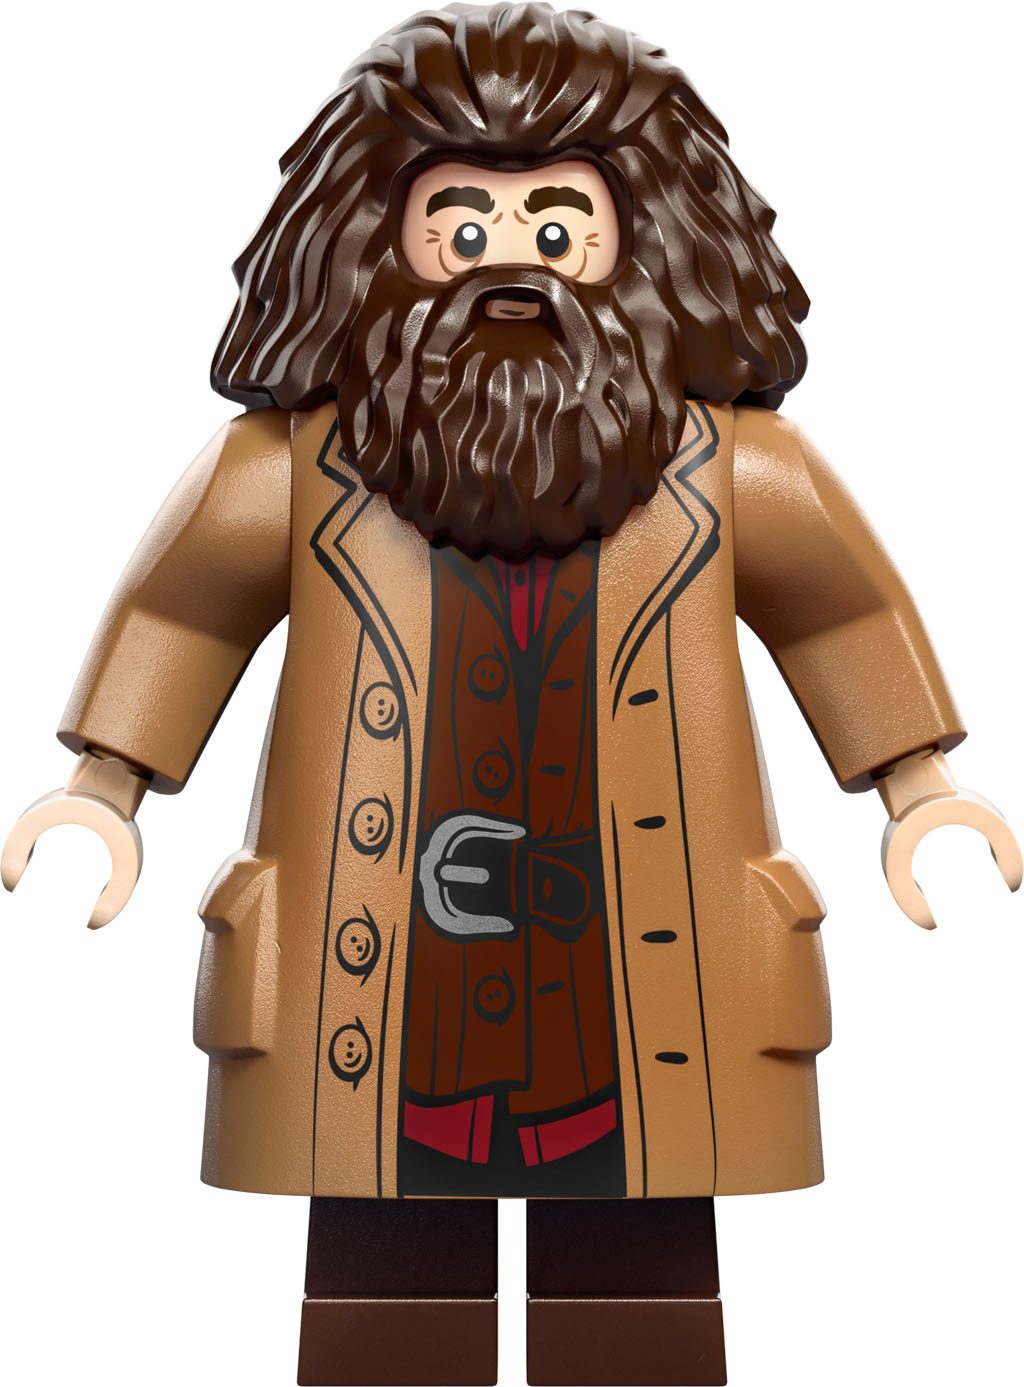 ▻ LEGO Harry Potter 76417 Gringotts Wizarding Bank Collectors